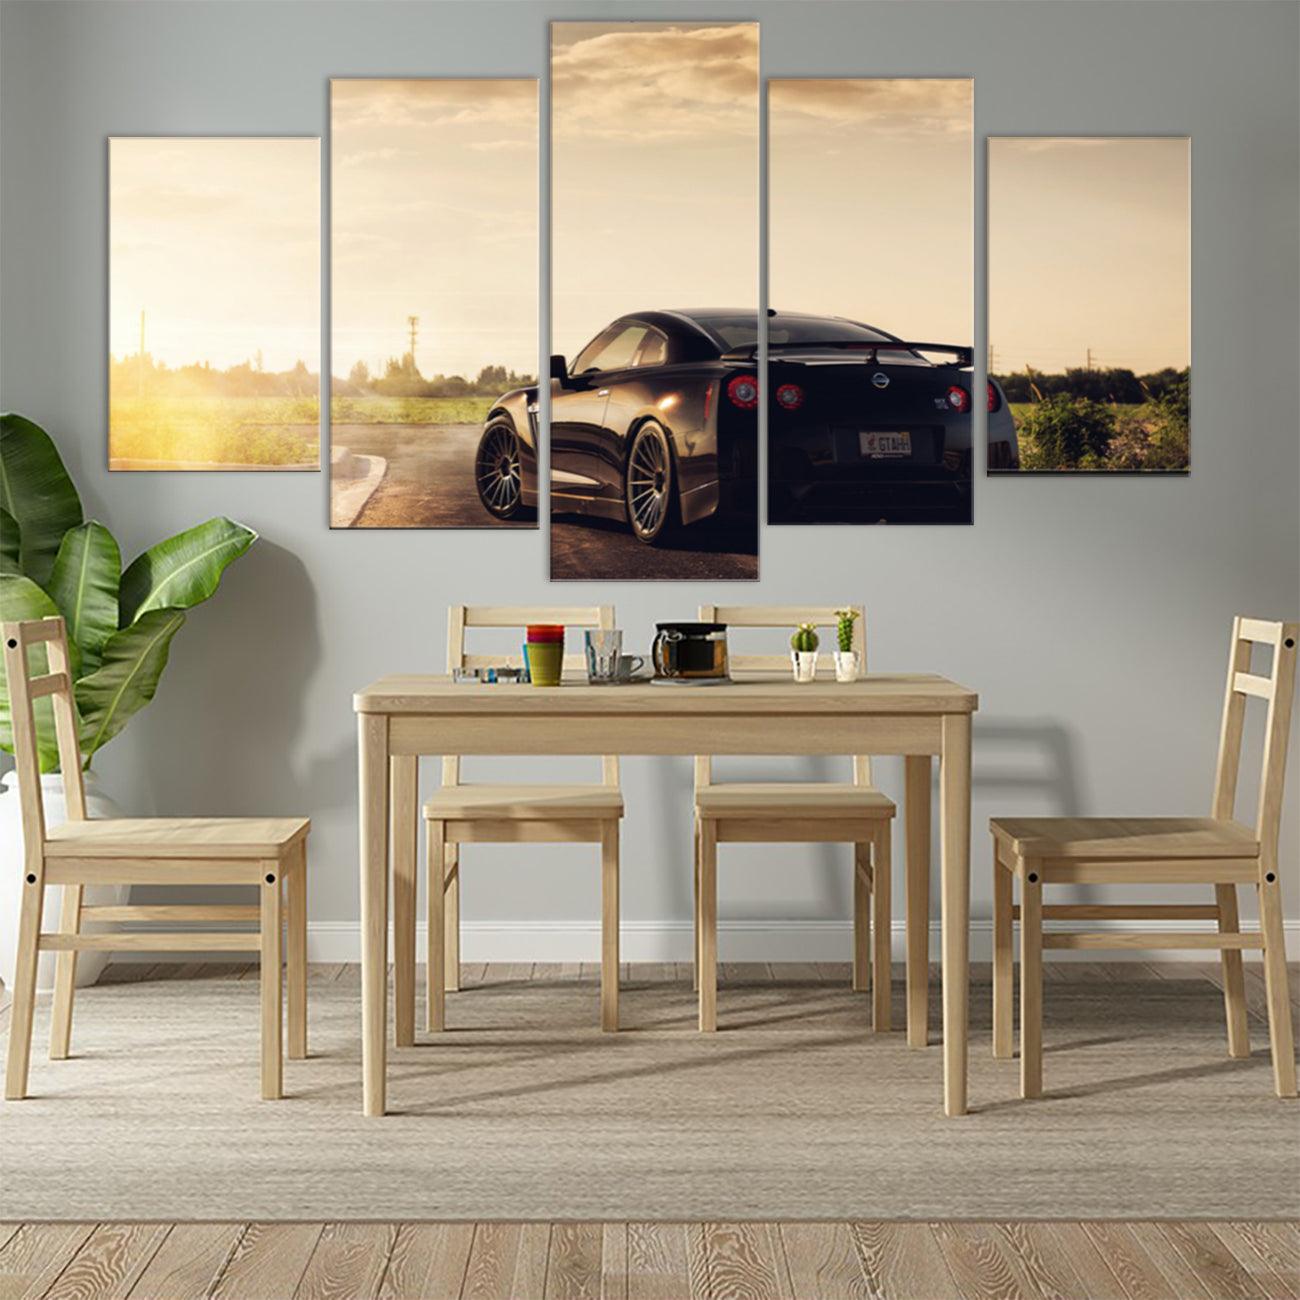 Nissan GTR 5 Panel Canvas Print Wall Art - GotItHere.com